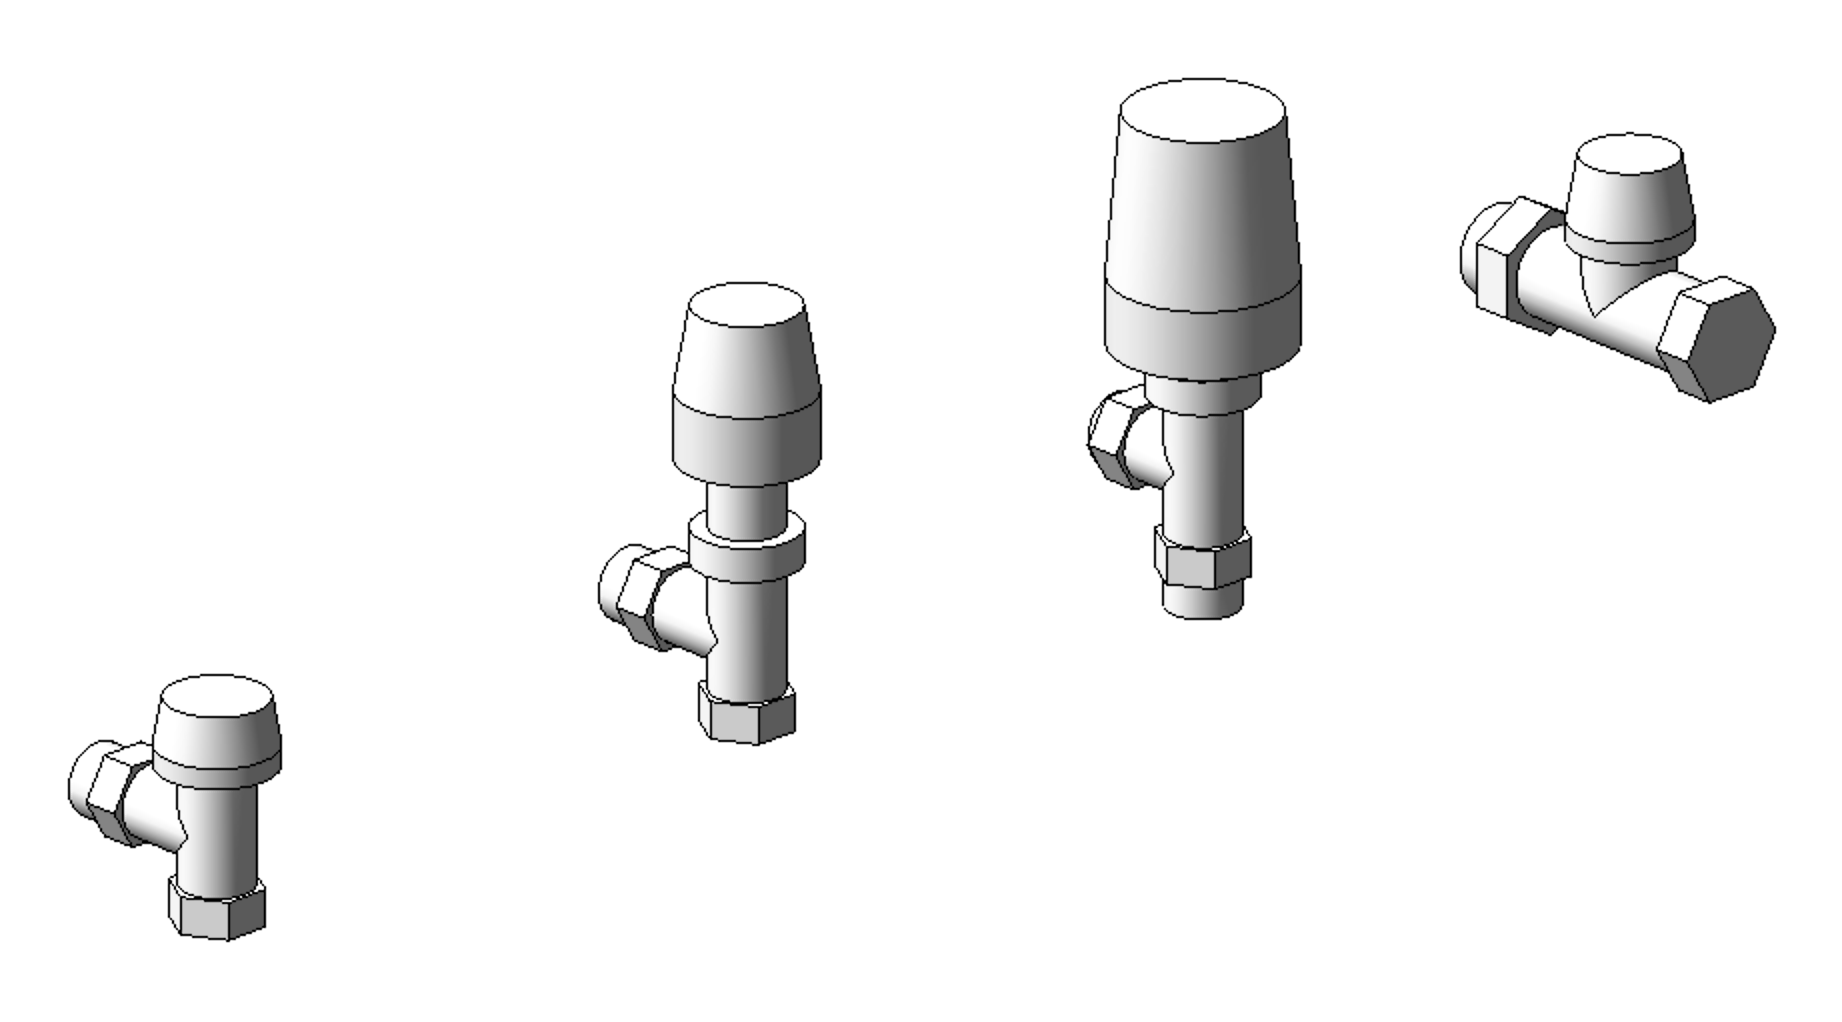 3D image showing radiator valves.